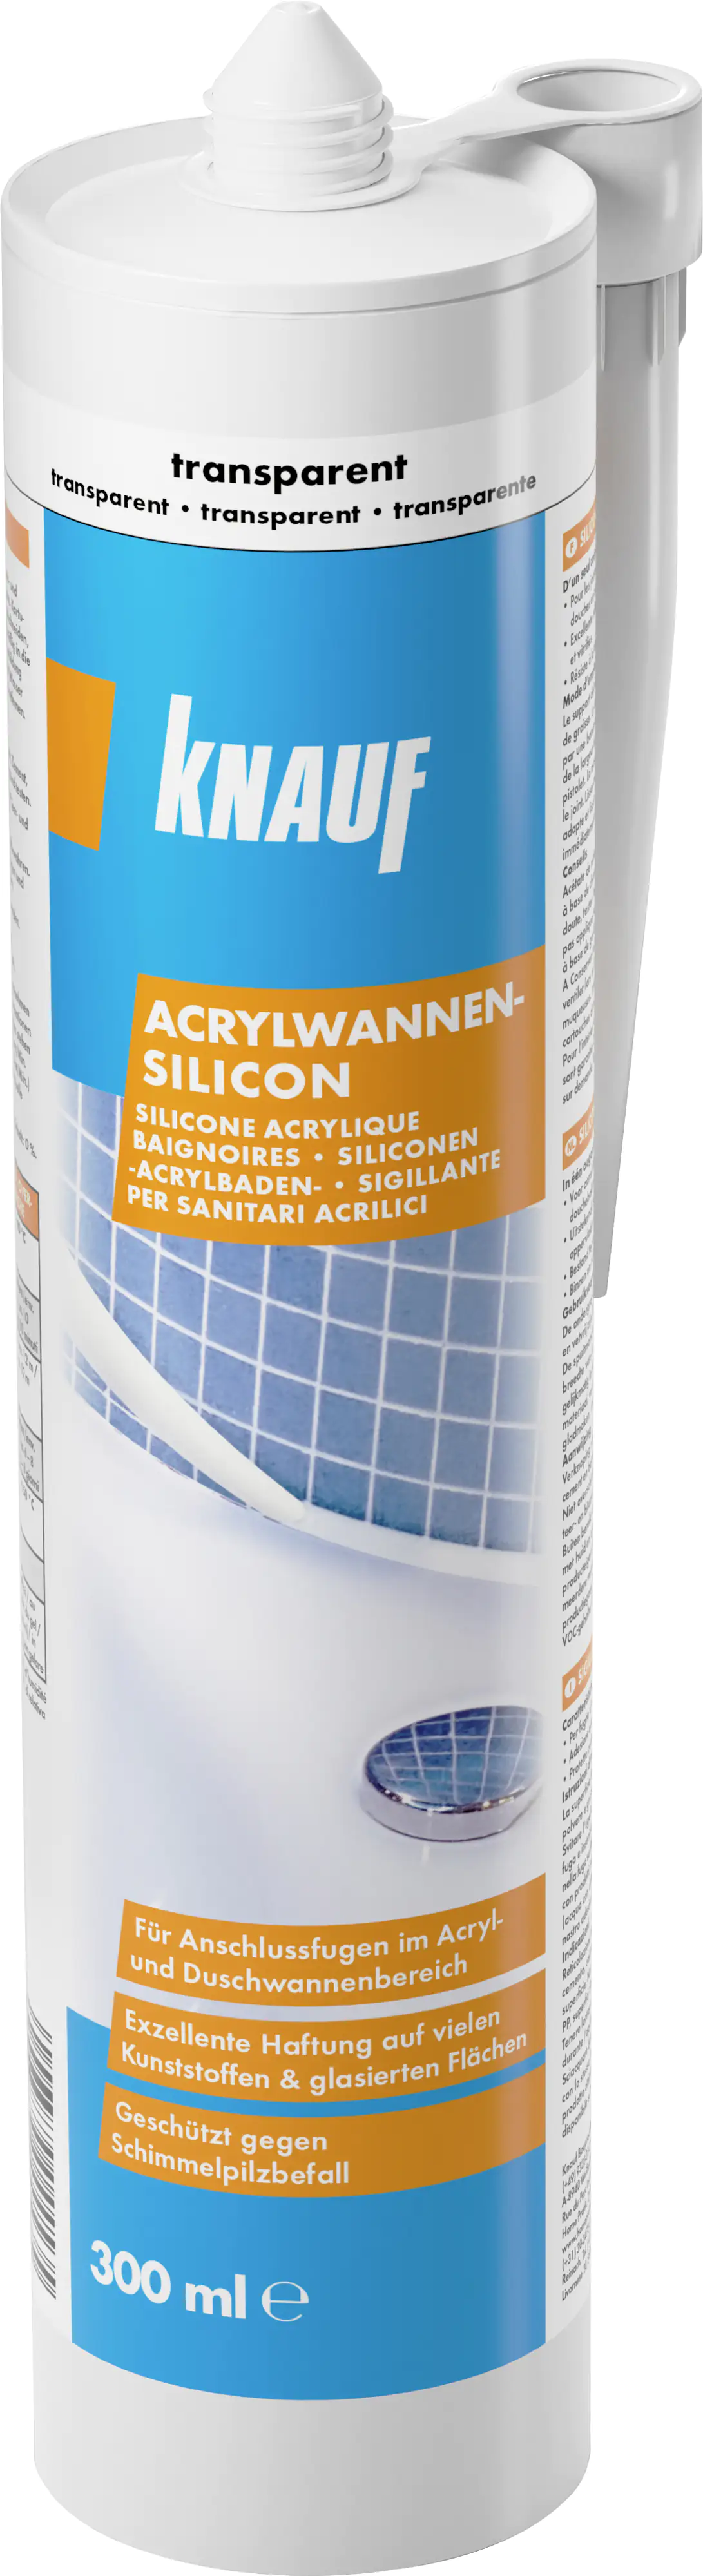 Knauf Acrylwannen Silikon transparent 300 ml kaufen